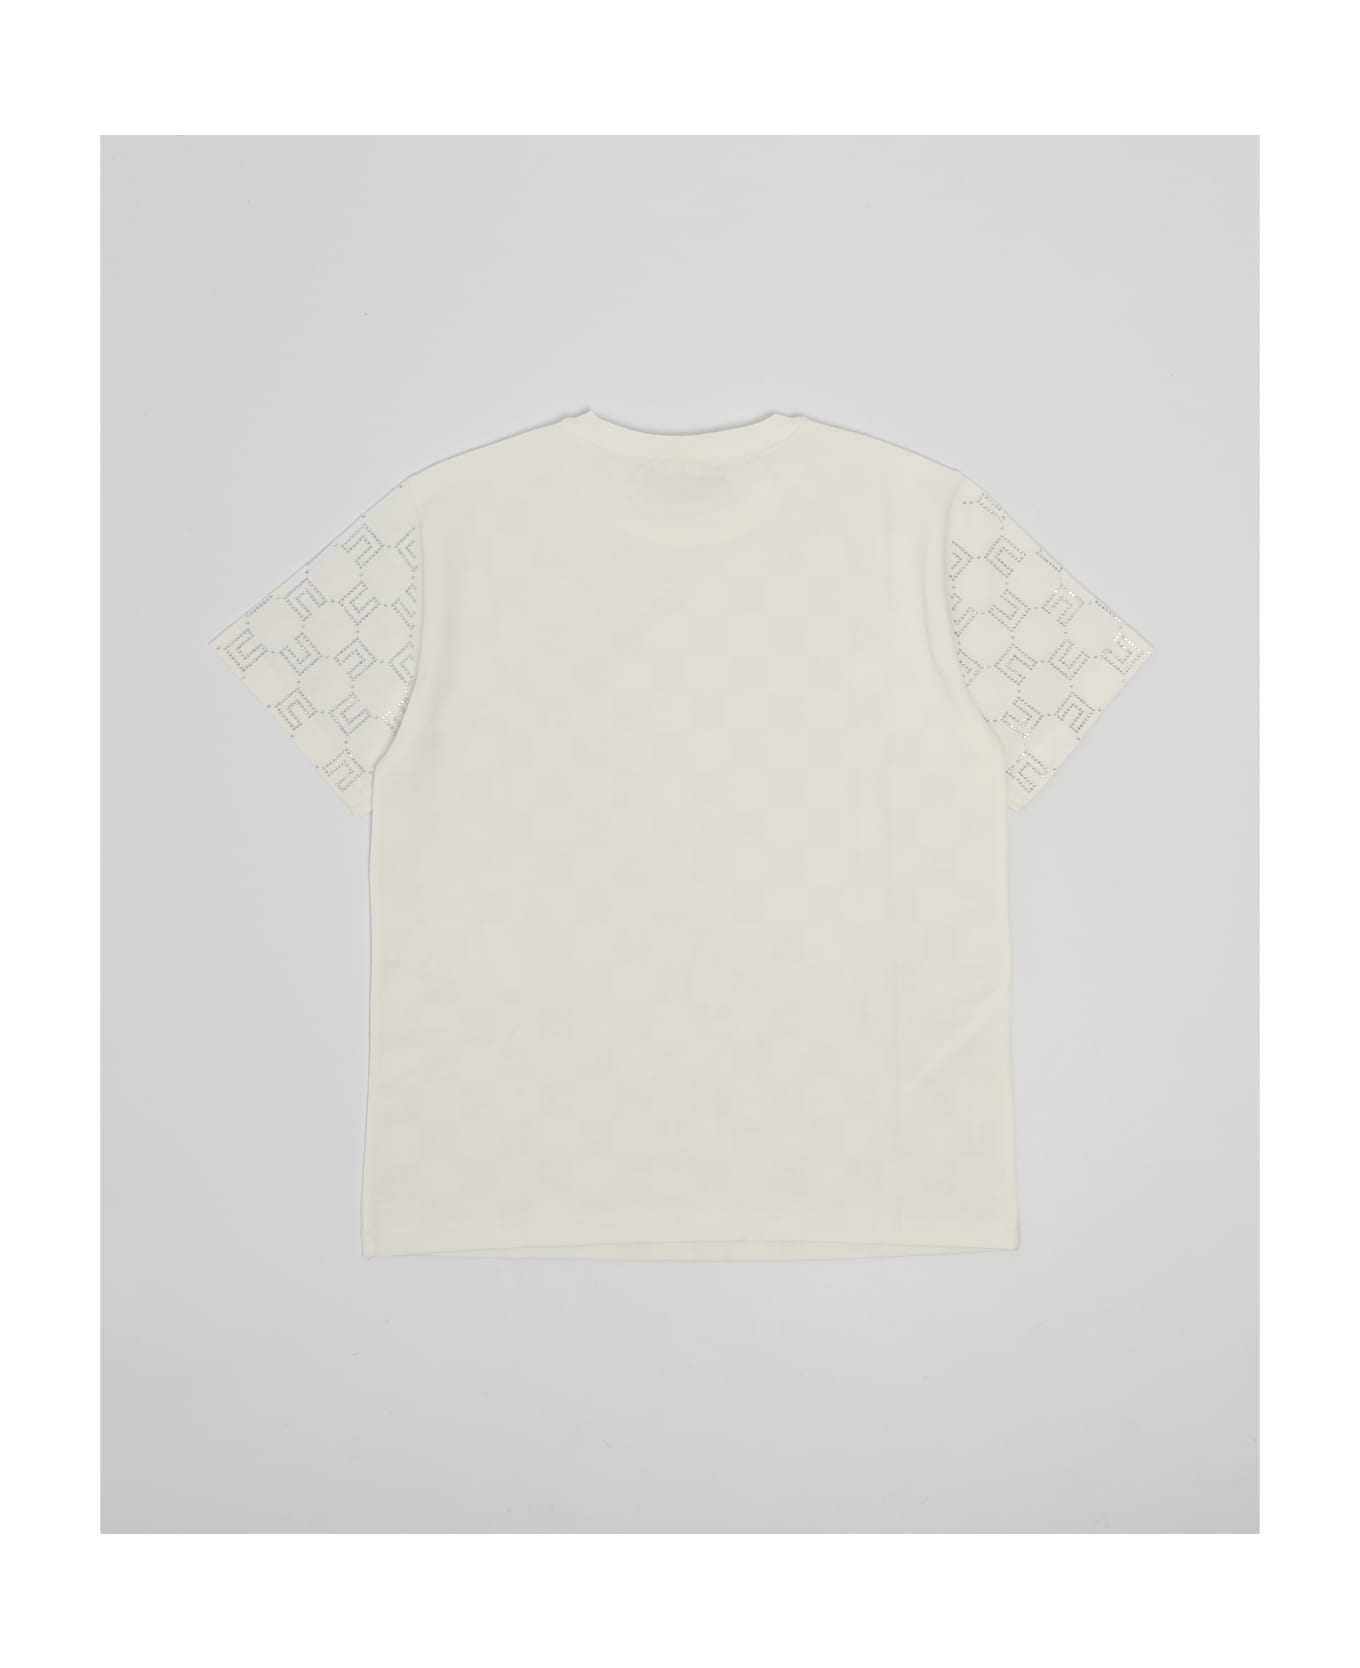 Elisabetta Franchi T-shirt T-shirt - PANNA Tシャツ＆ポロシャツ